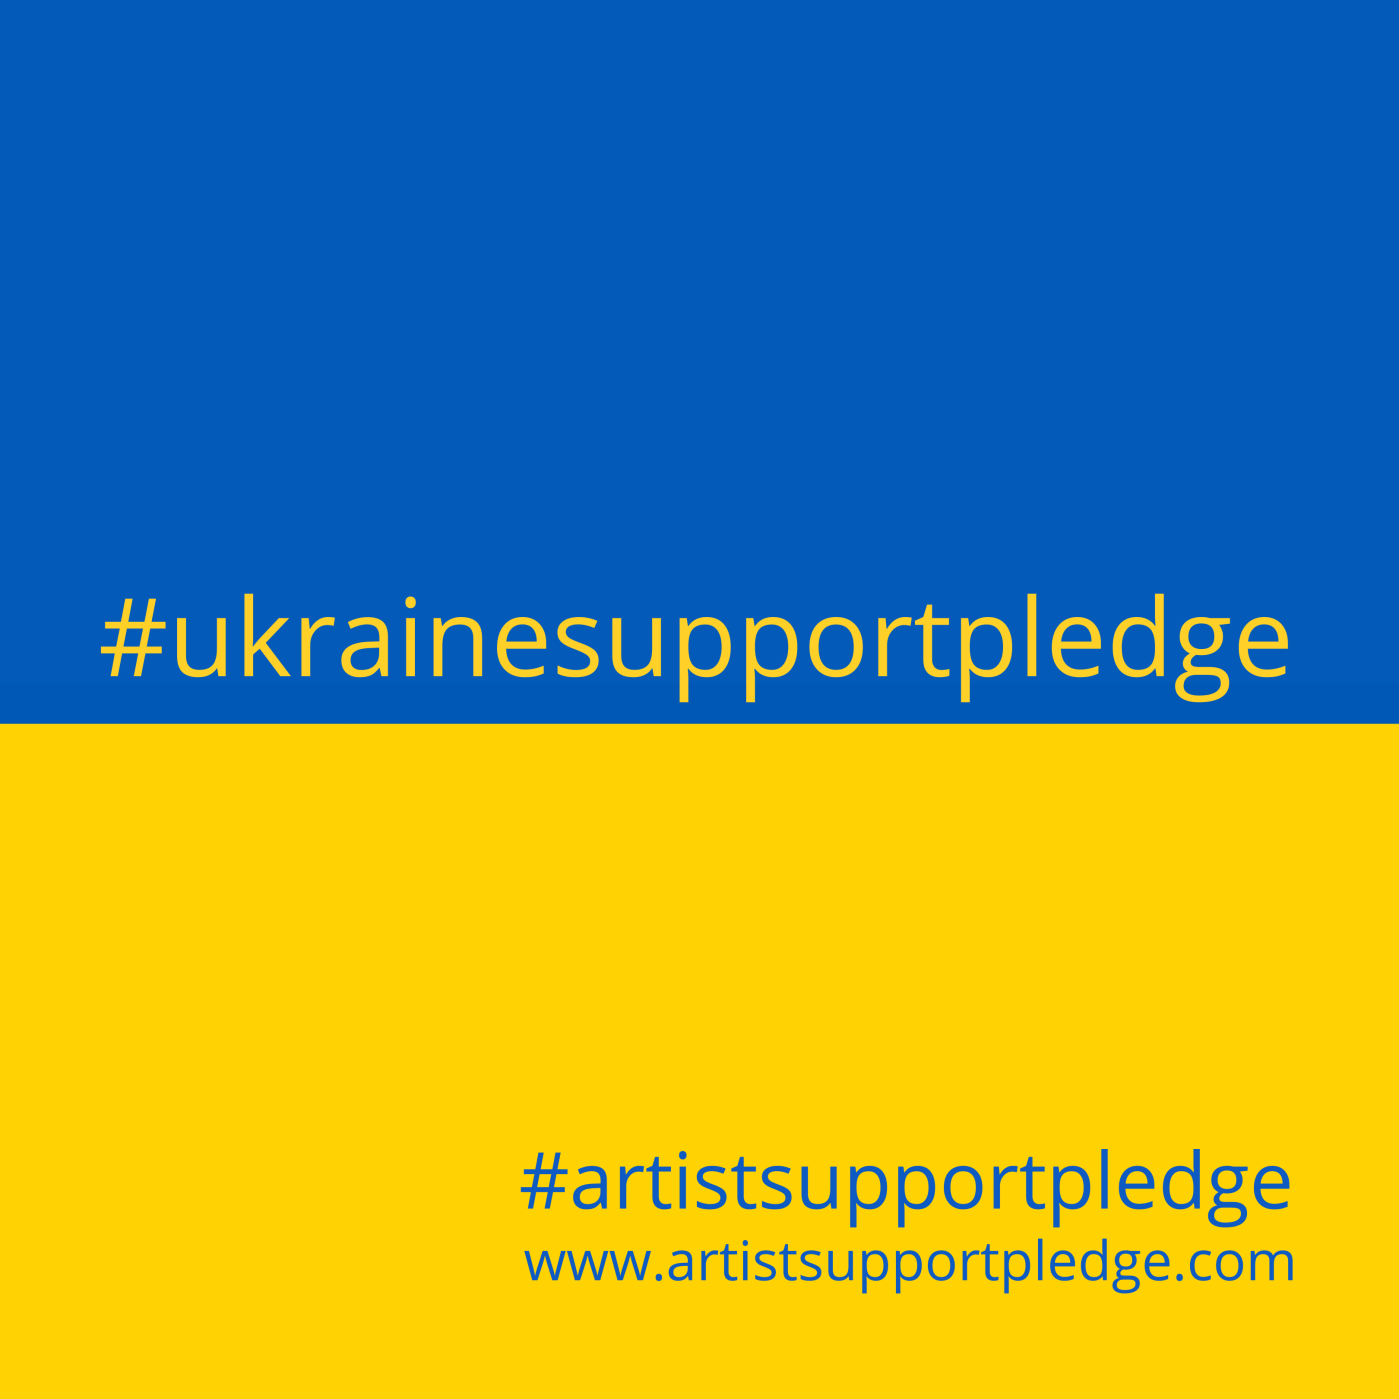 The #UkraineSupportPledge banner image